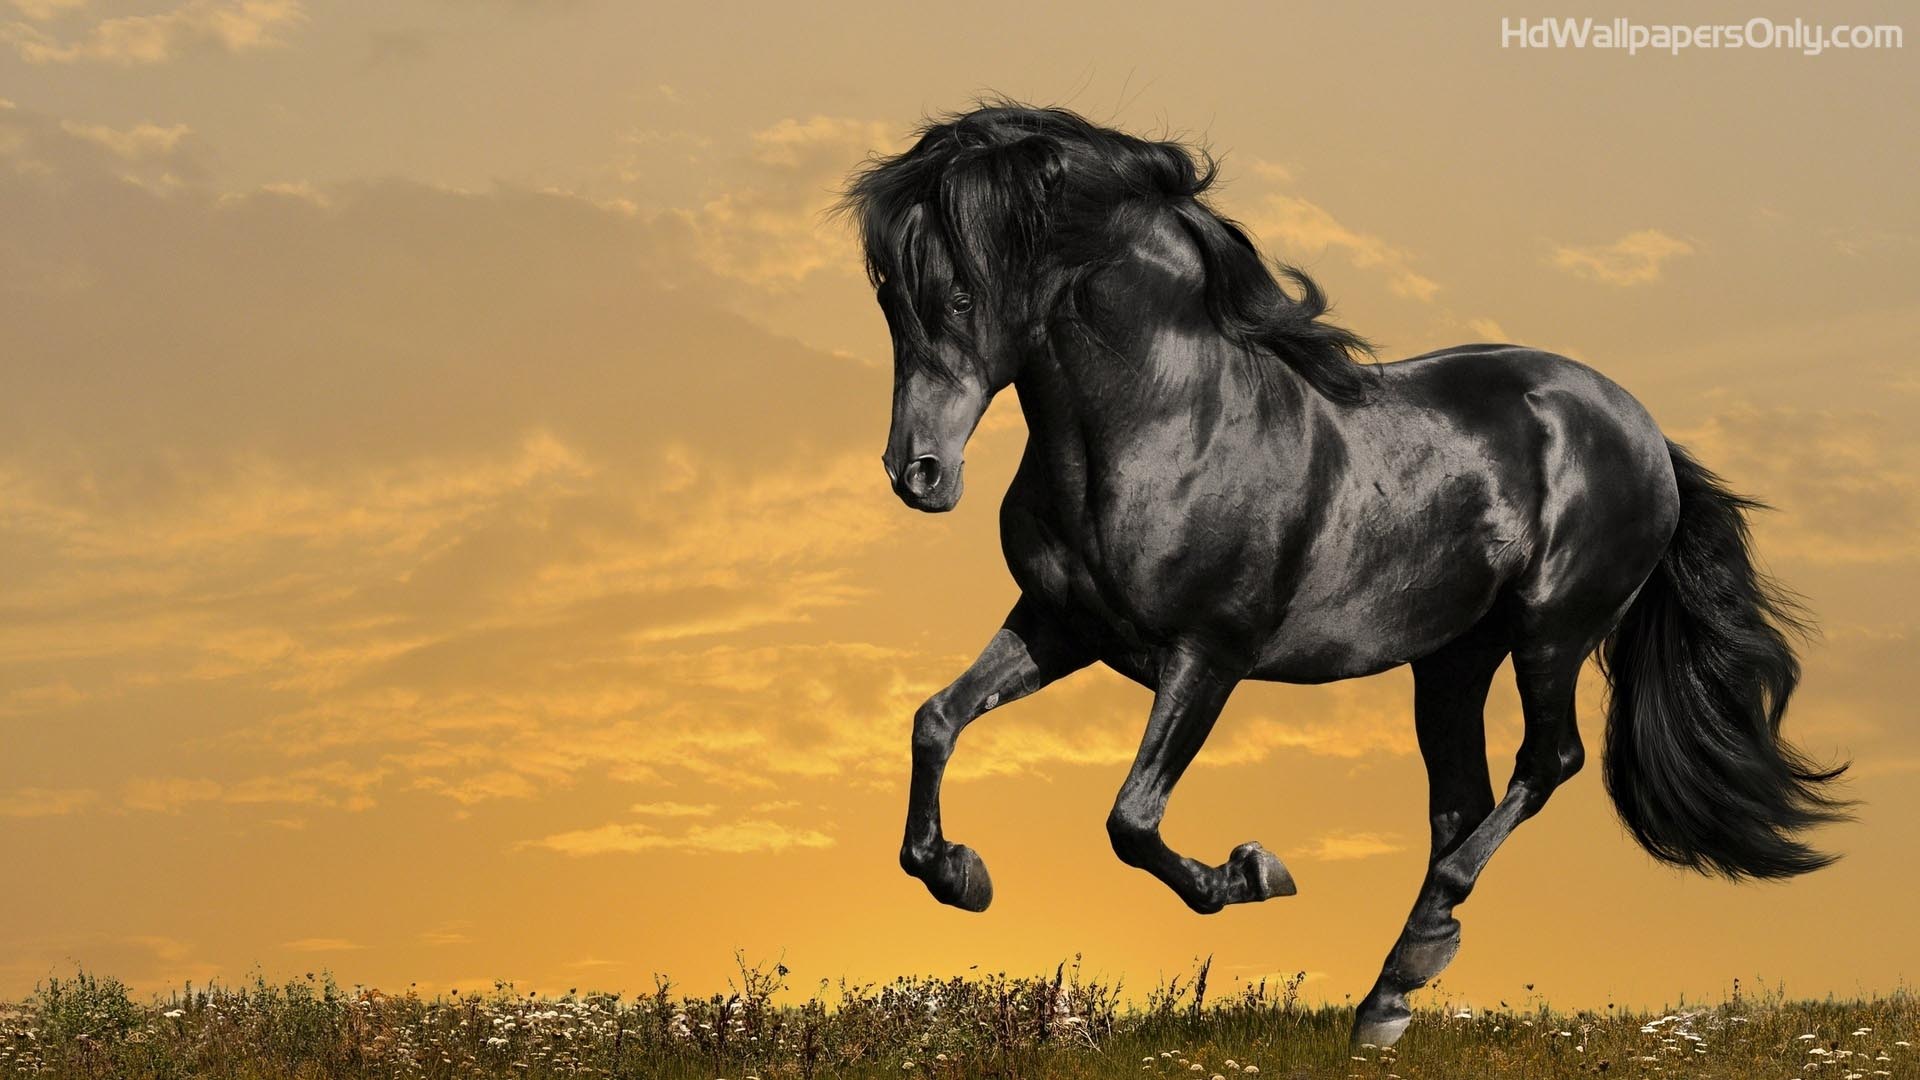 Beautiful Horse HD Wallpaper Car Picture